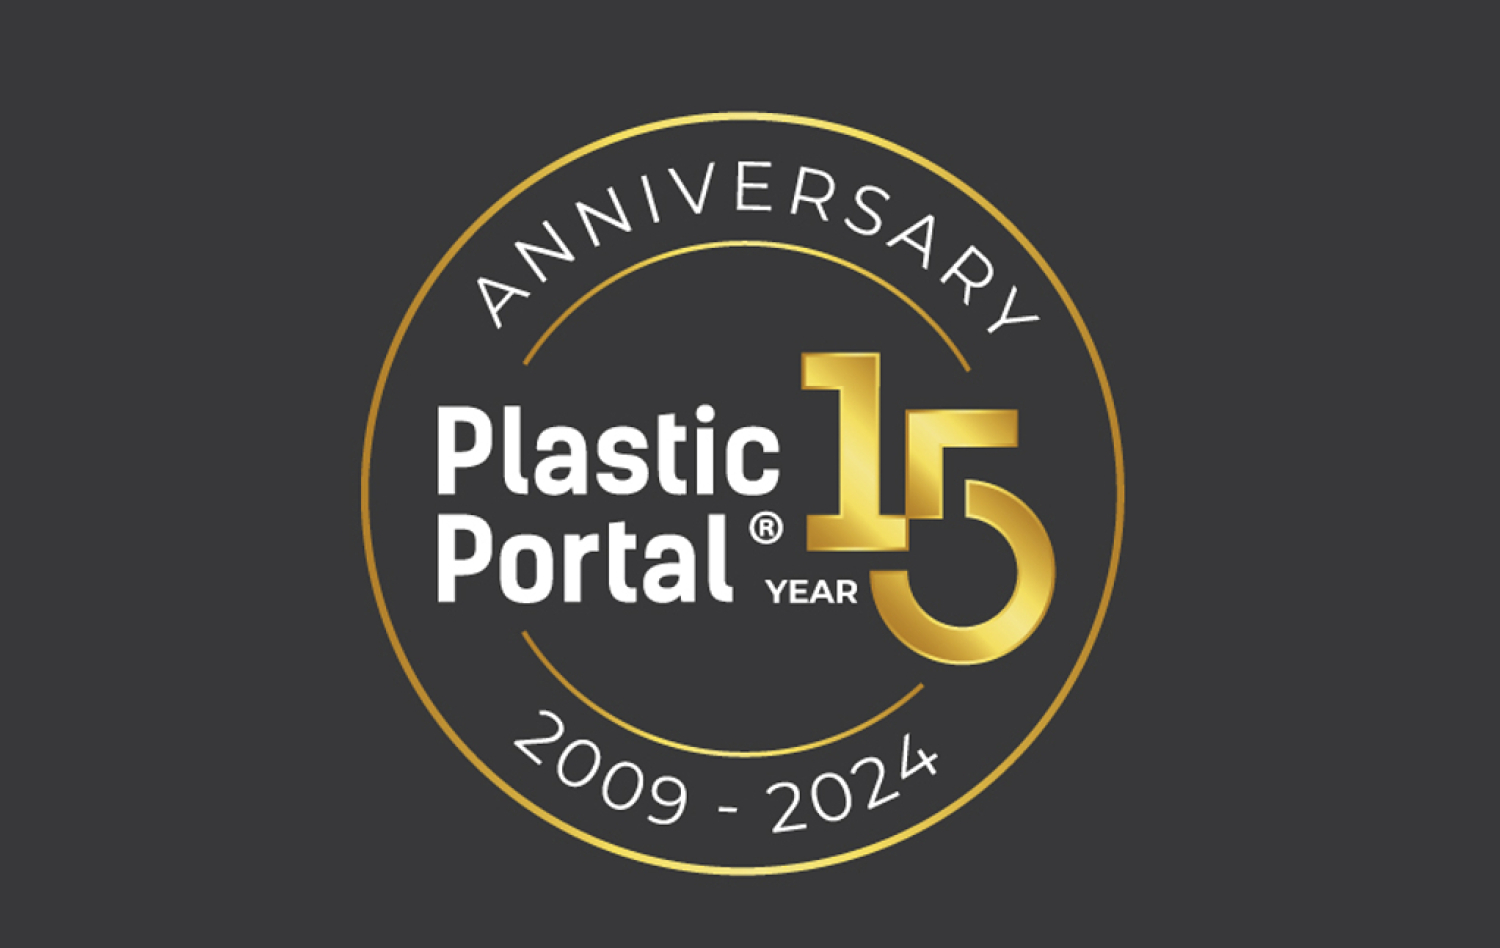 PlasticPortal celebrates its 15th birthday!